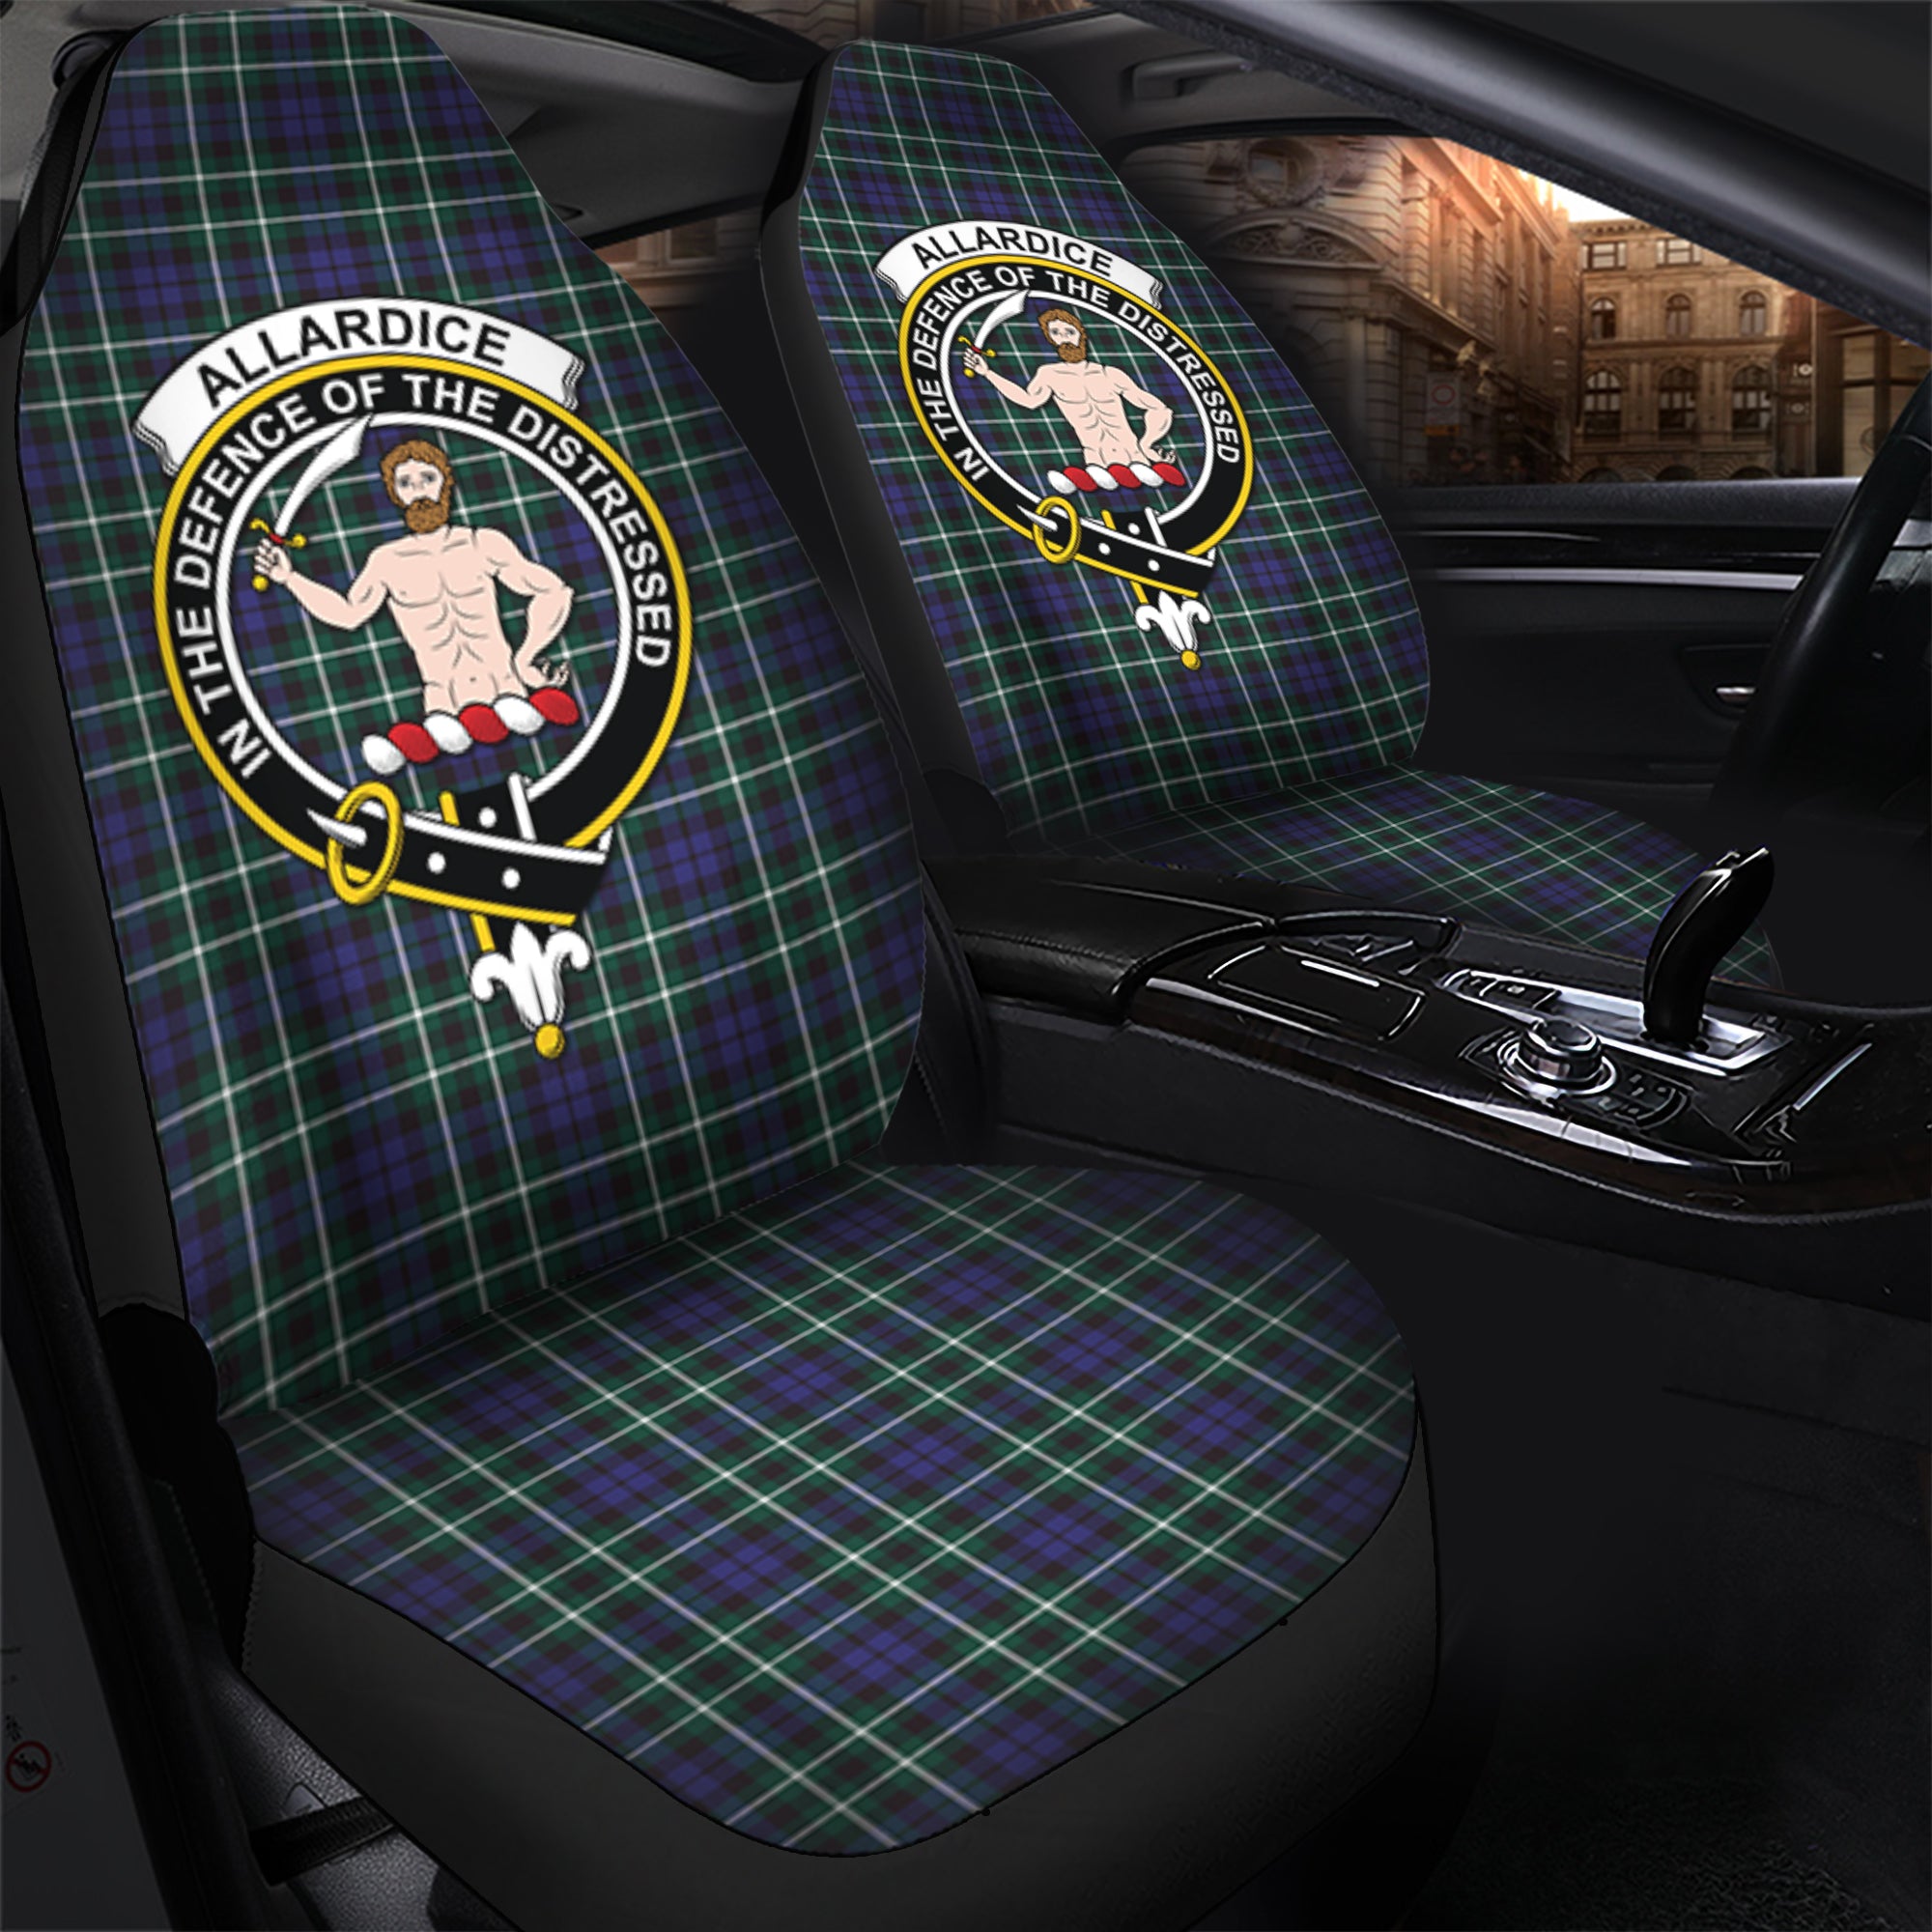 Allardice Clan Tartan Car Seat Cover, Family Crest Tartan Seat Cover TS23